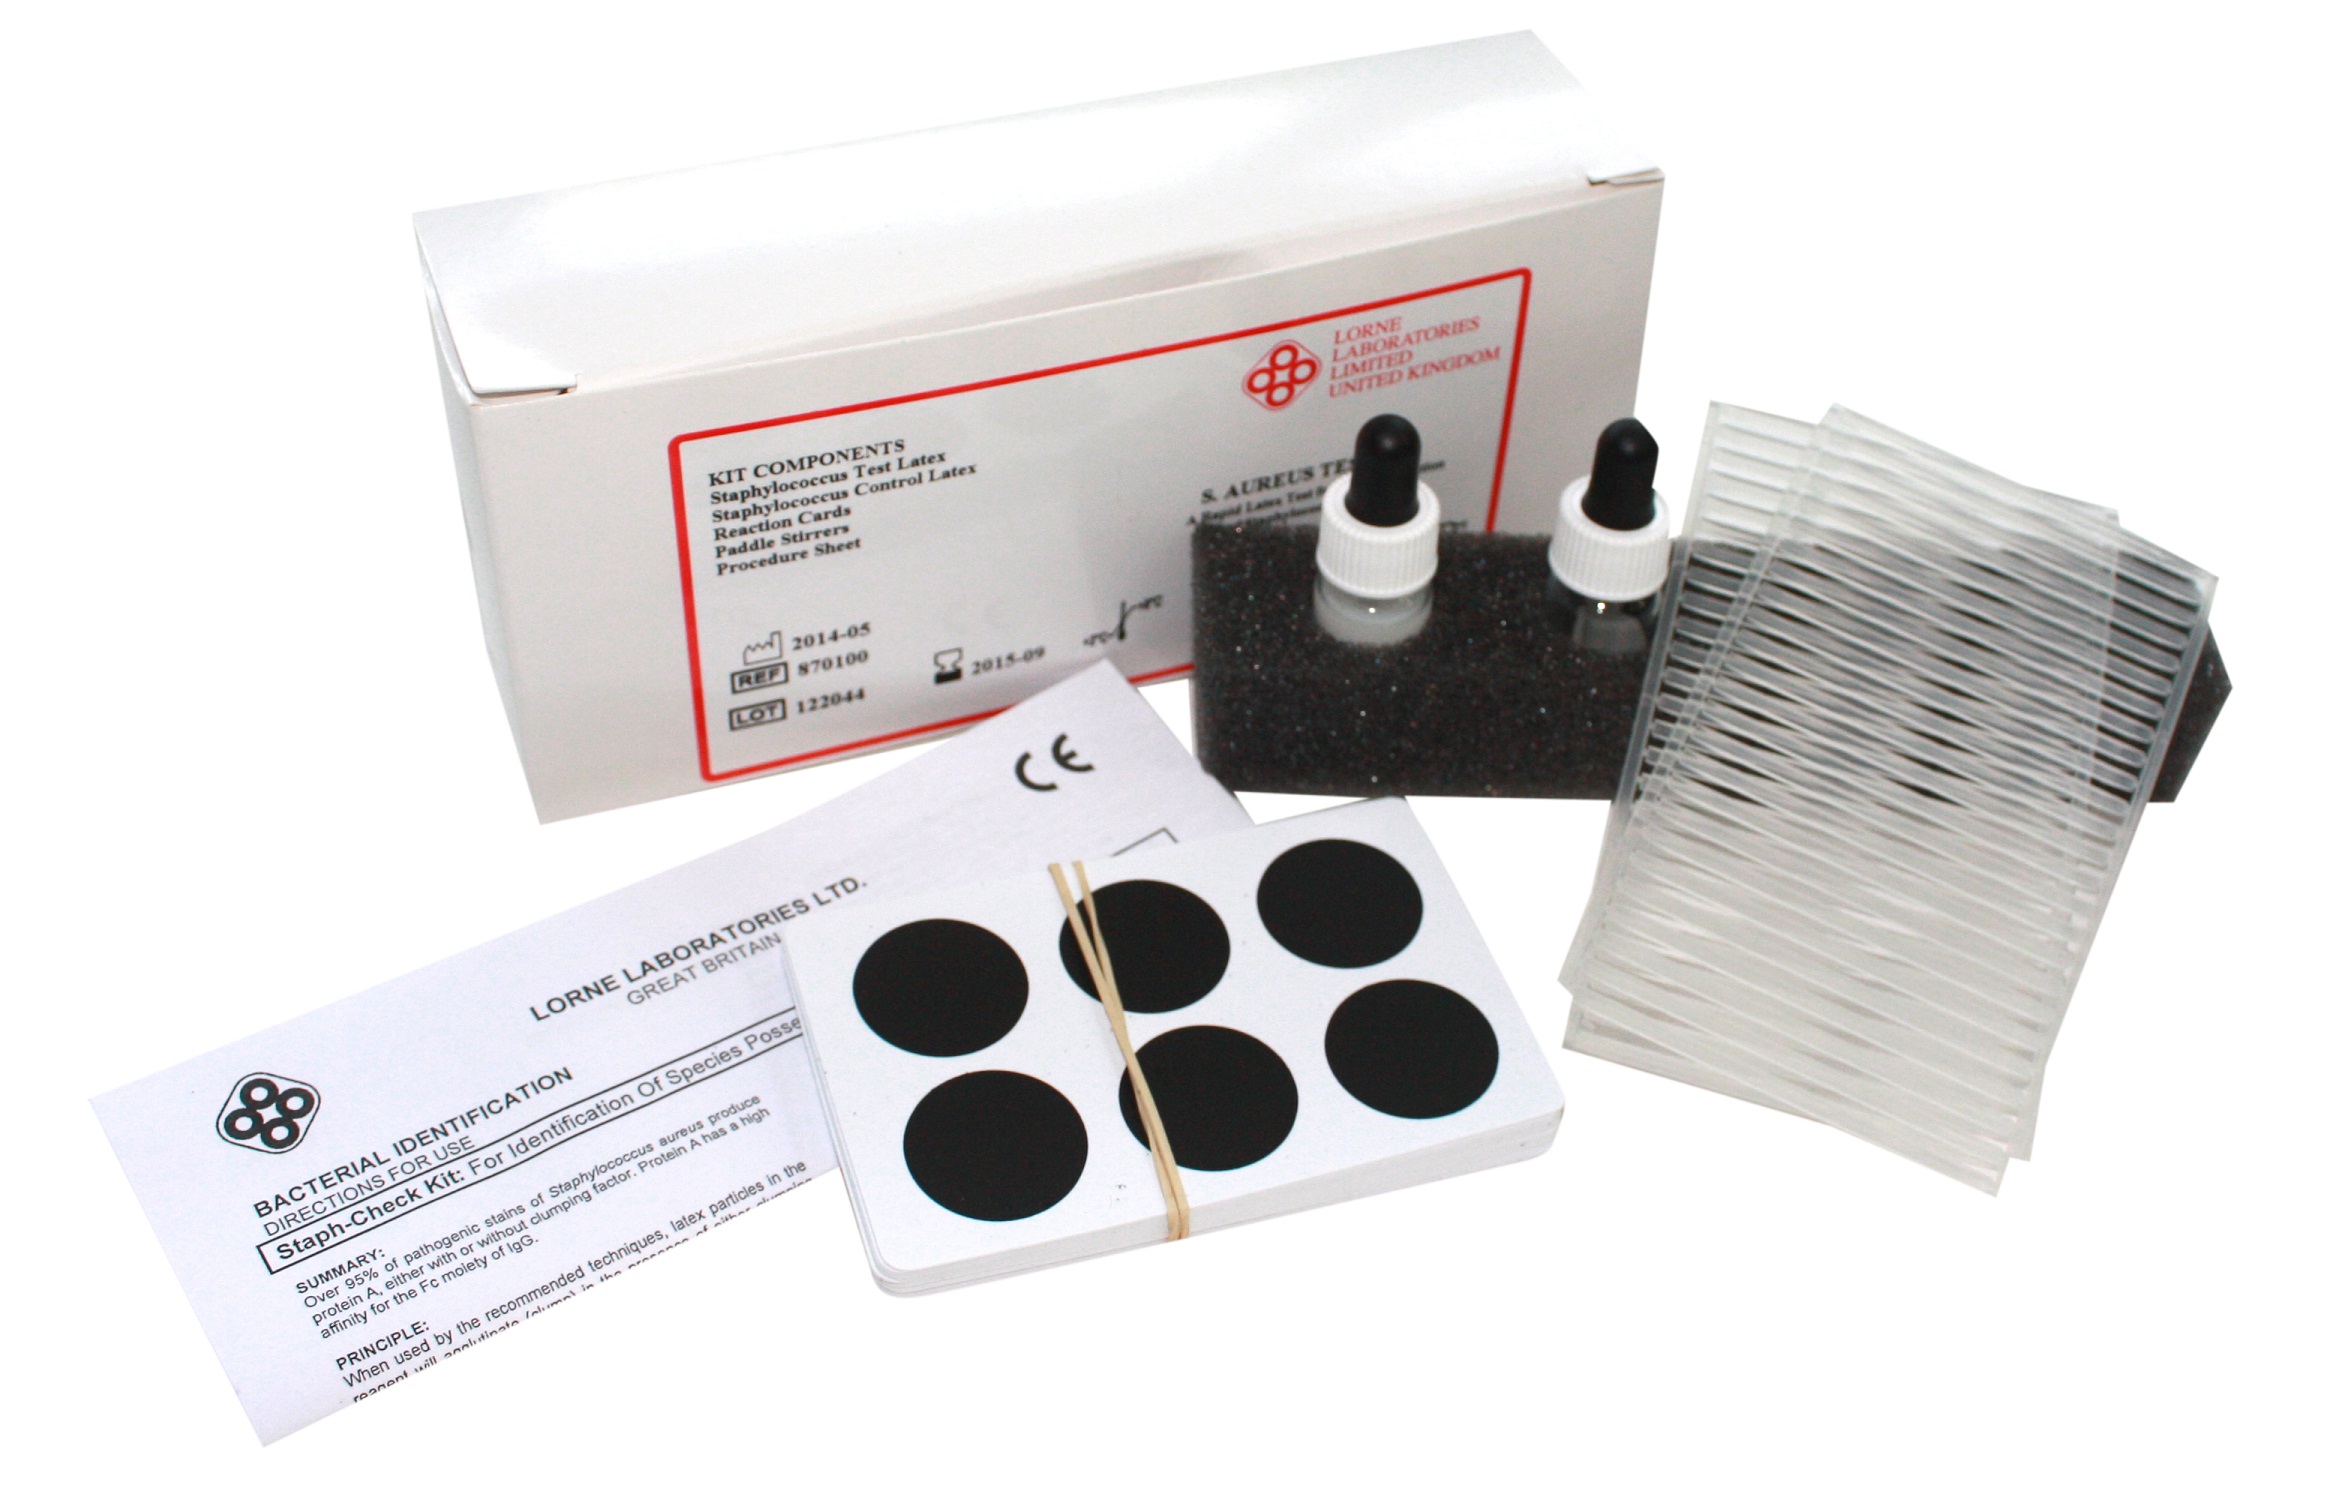 Latex agglutination test kits